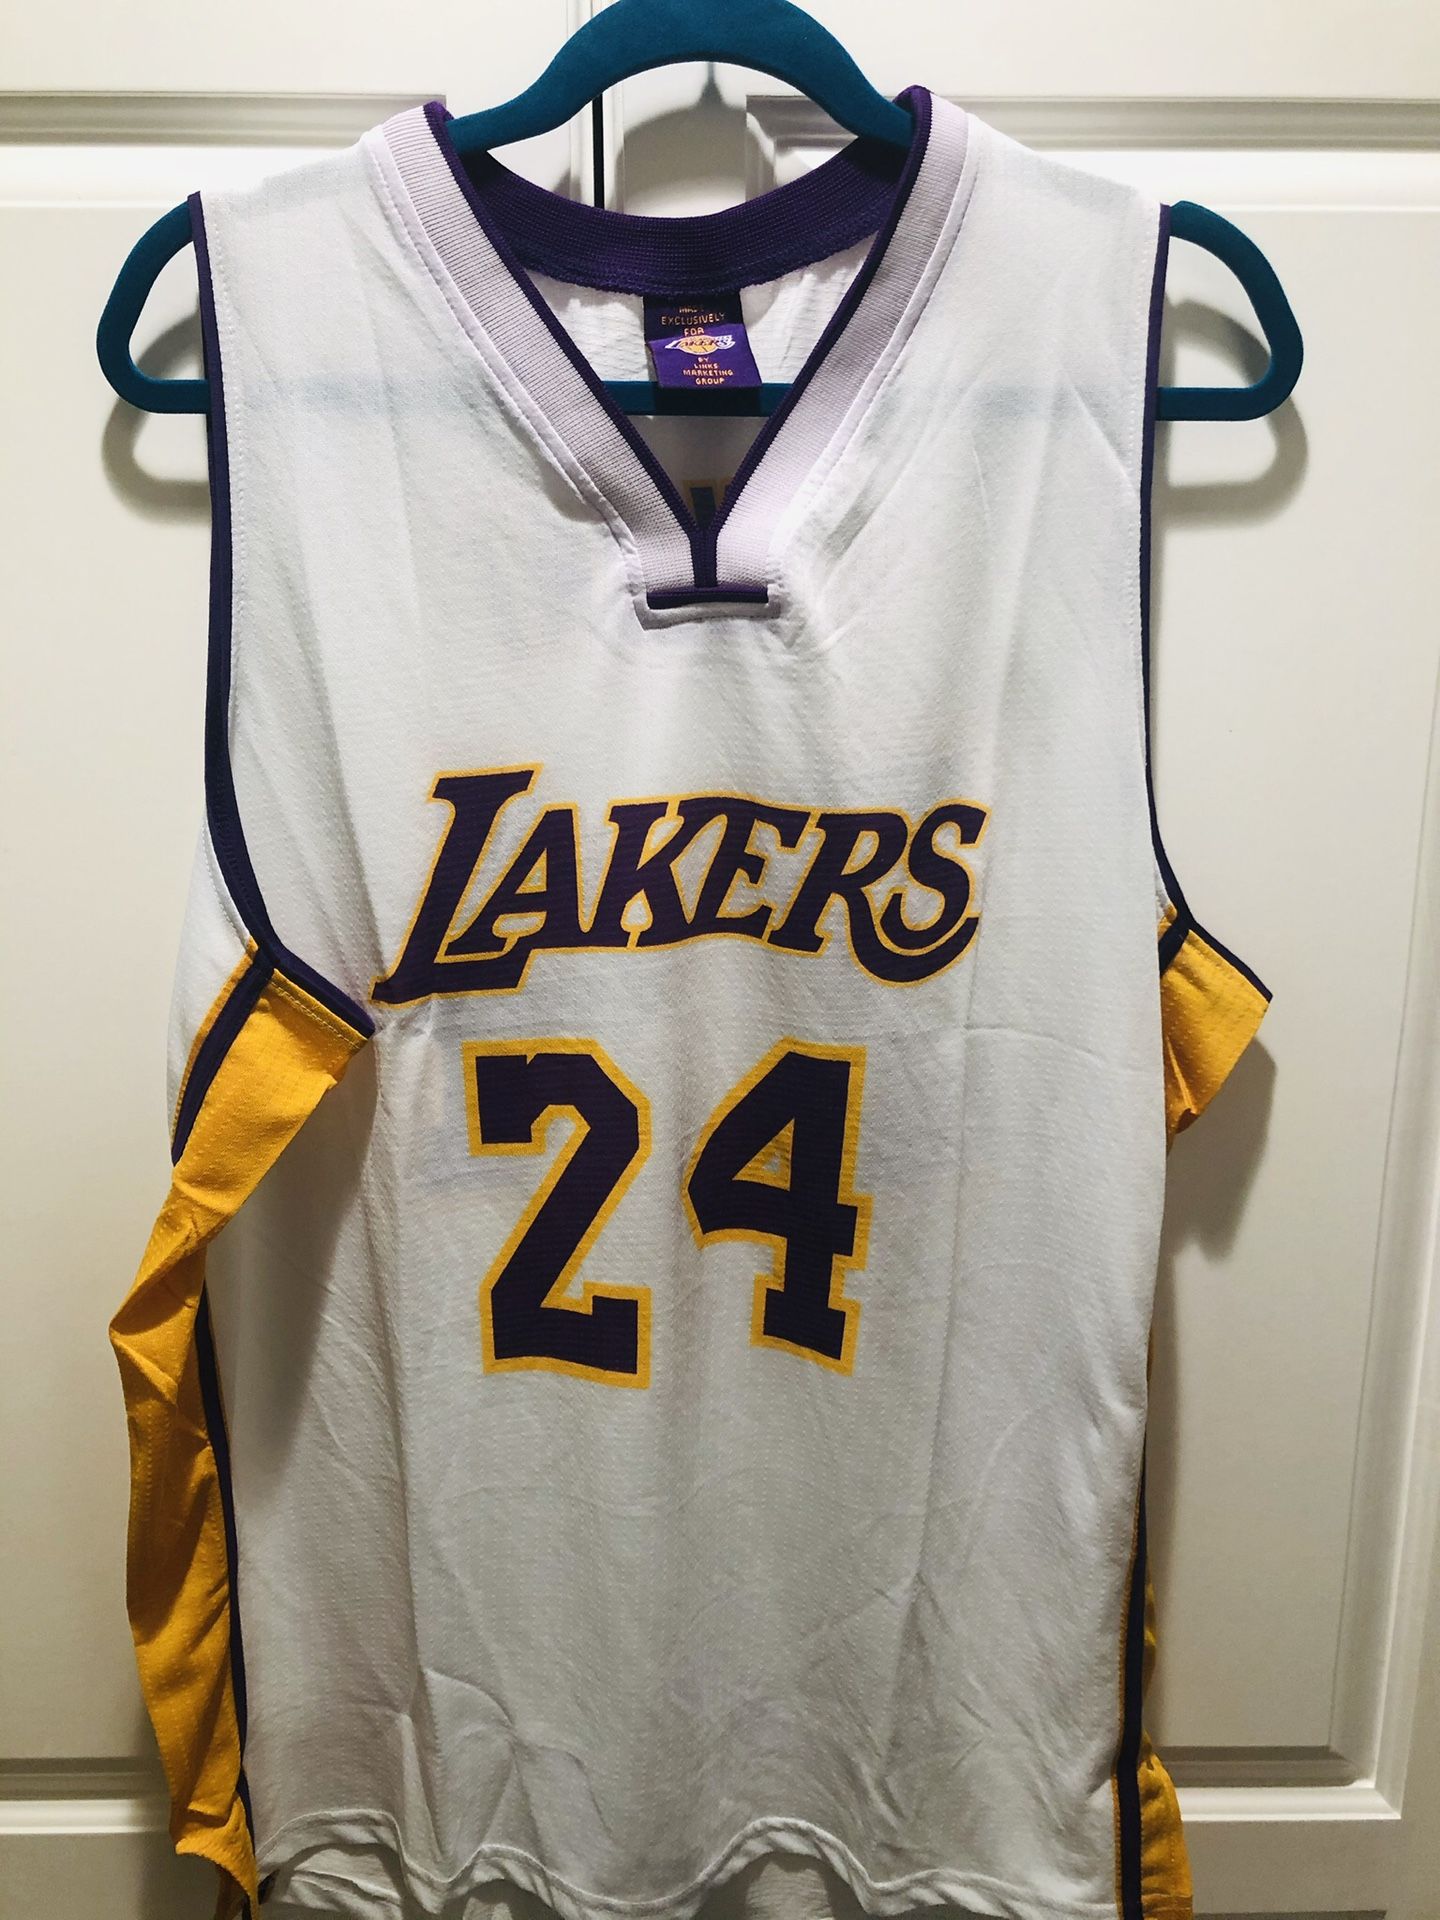 New Rare Kobe Bryant XL Lakers Jersey.